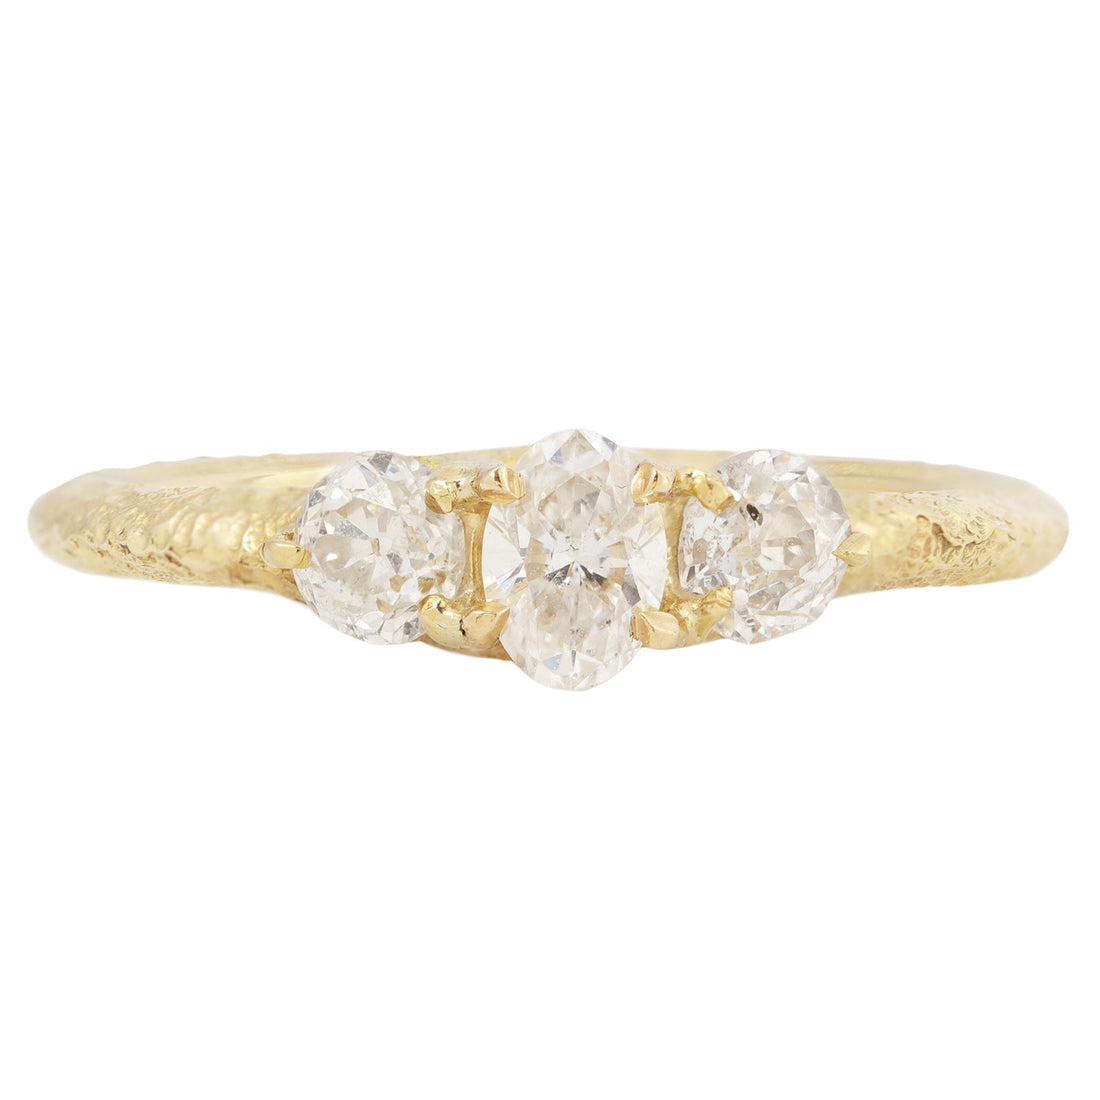 Oval Diamond Trio ring in 18k yellow gold by Erin Cuff Jewelry.